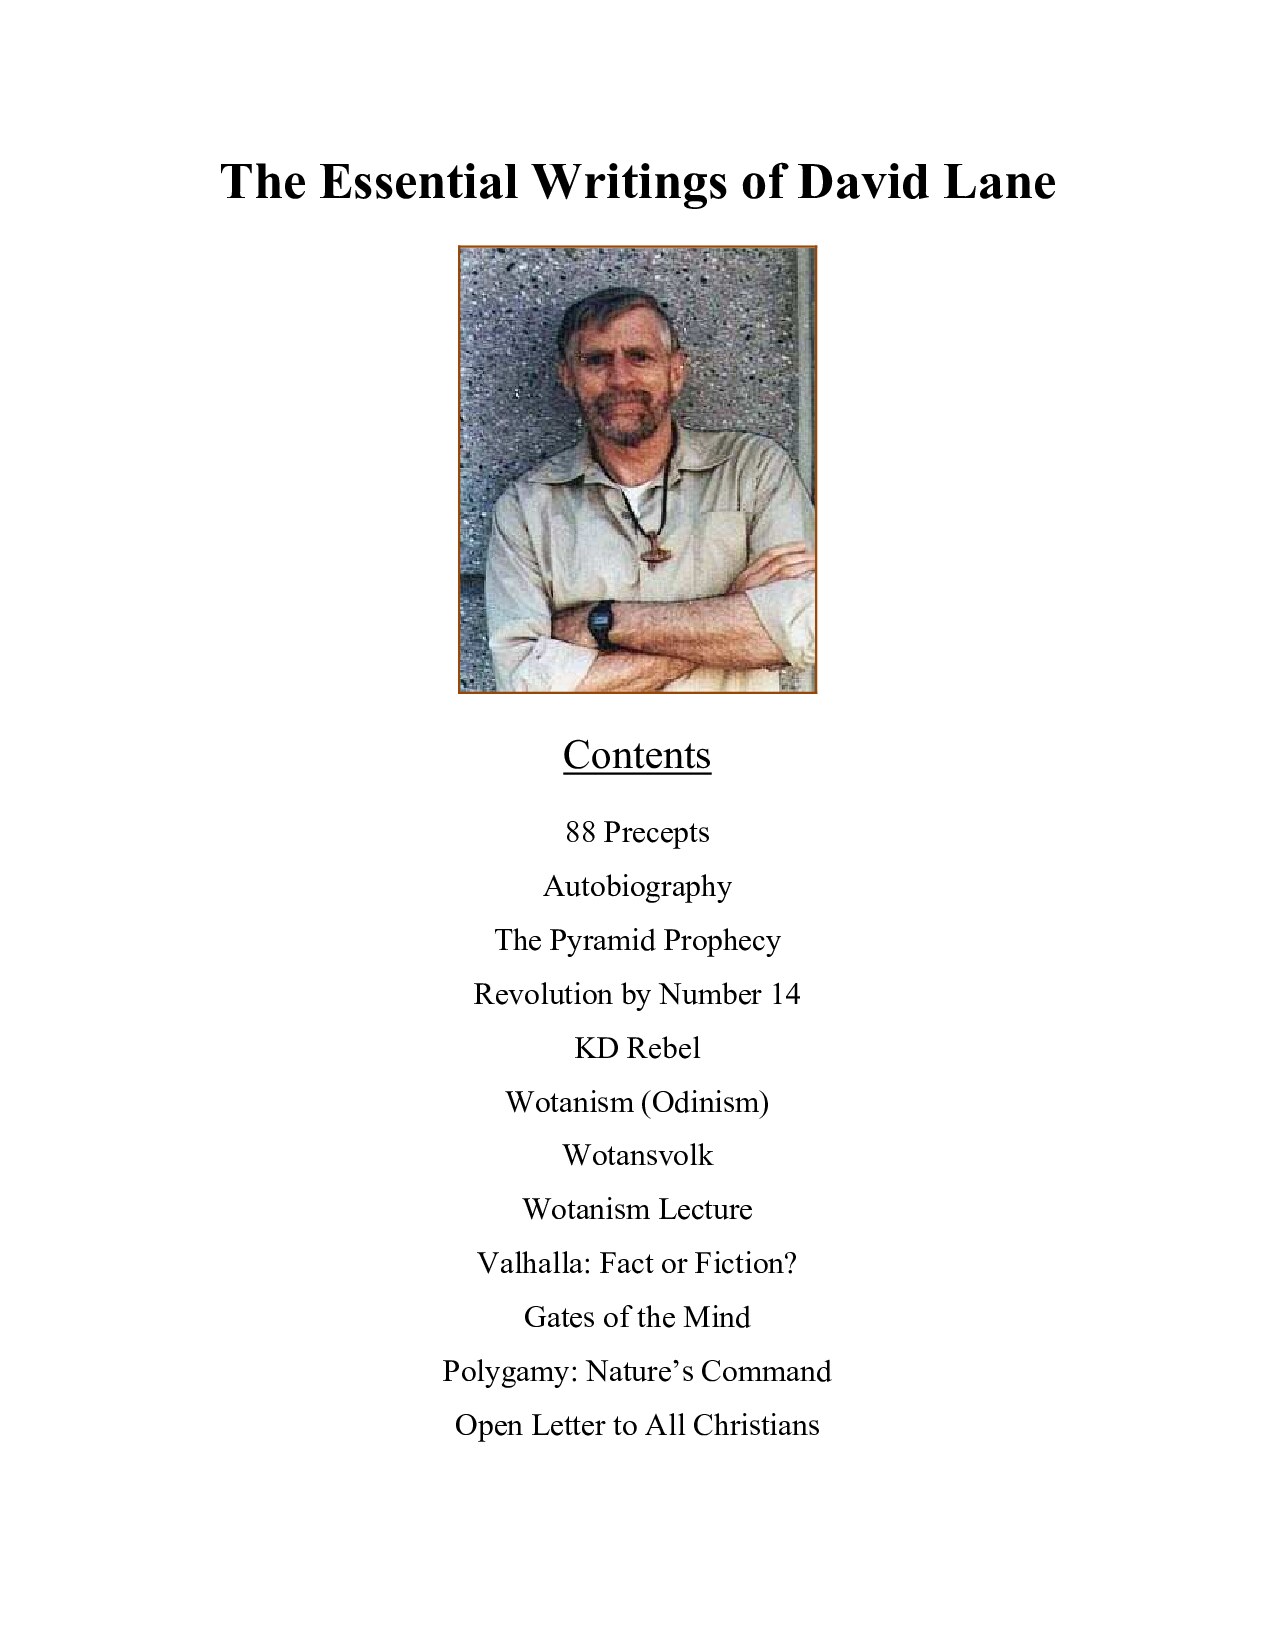 Lane, David; Essential Writings of David Lane, The